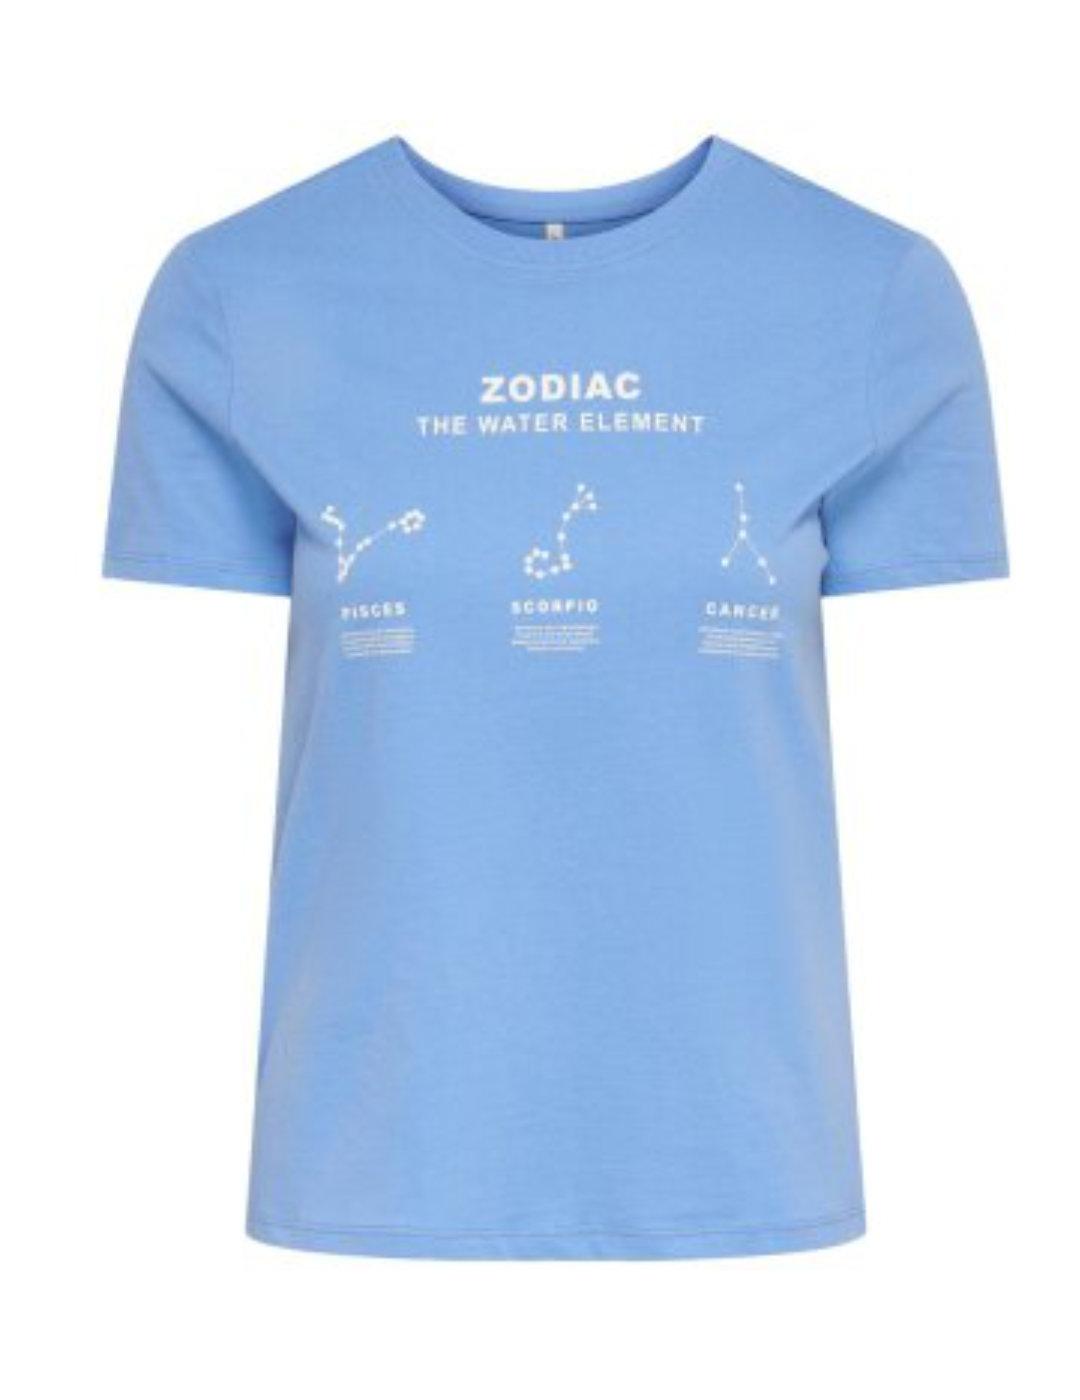 Camiseta Only Zodiac celeste manga corta para mujer